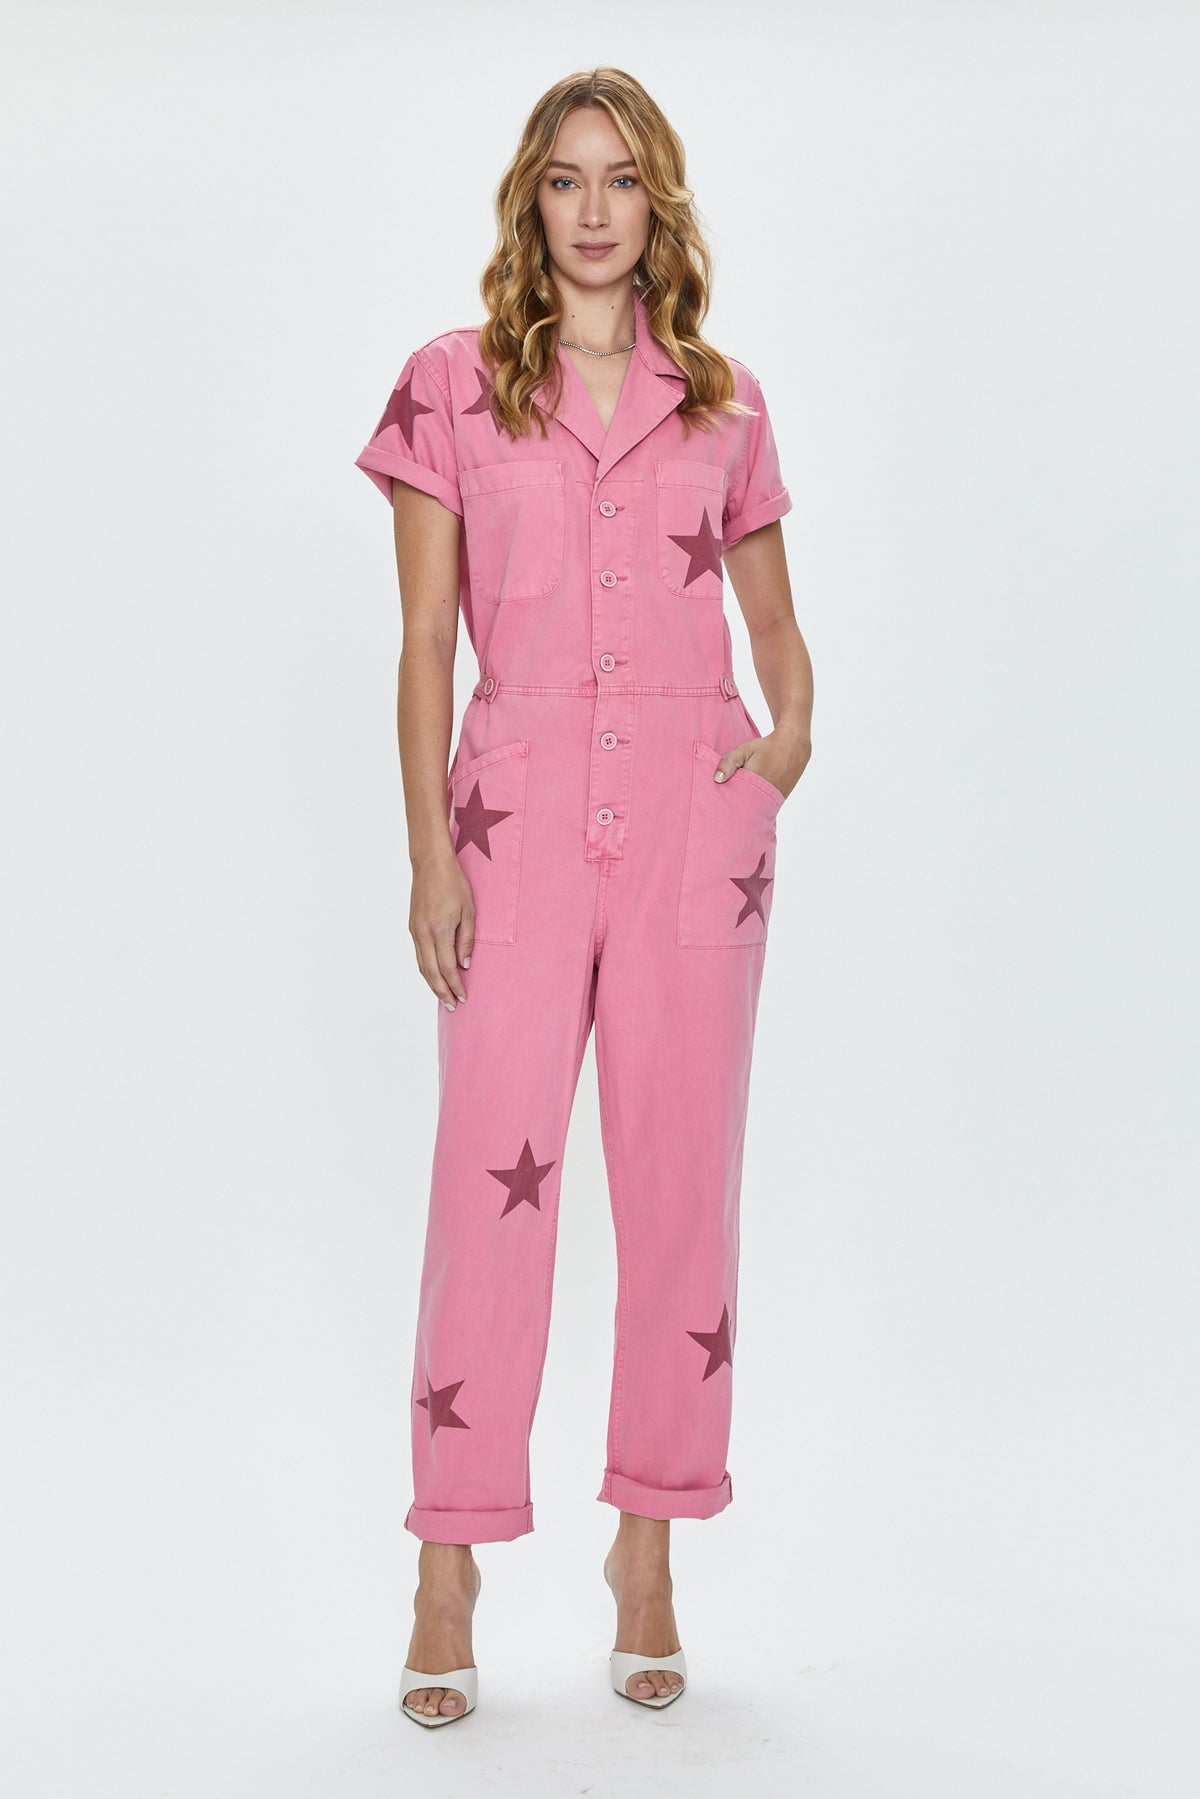 Grover Short Sleeve Field Suit - Royal Flamingo